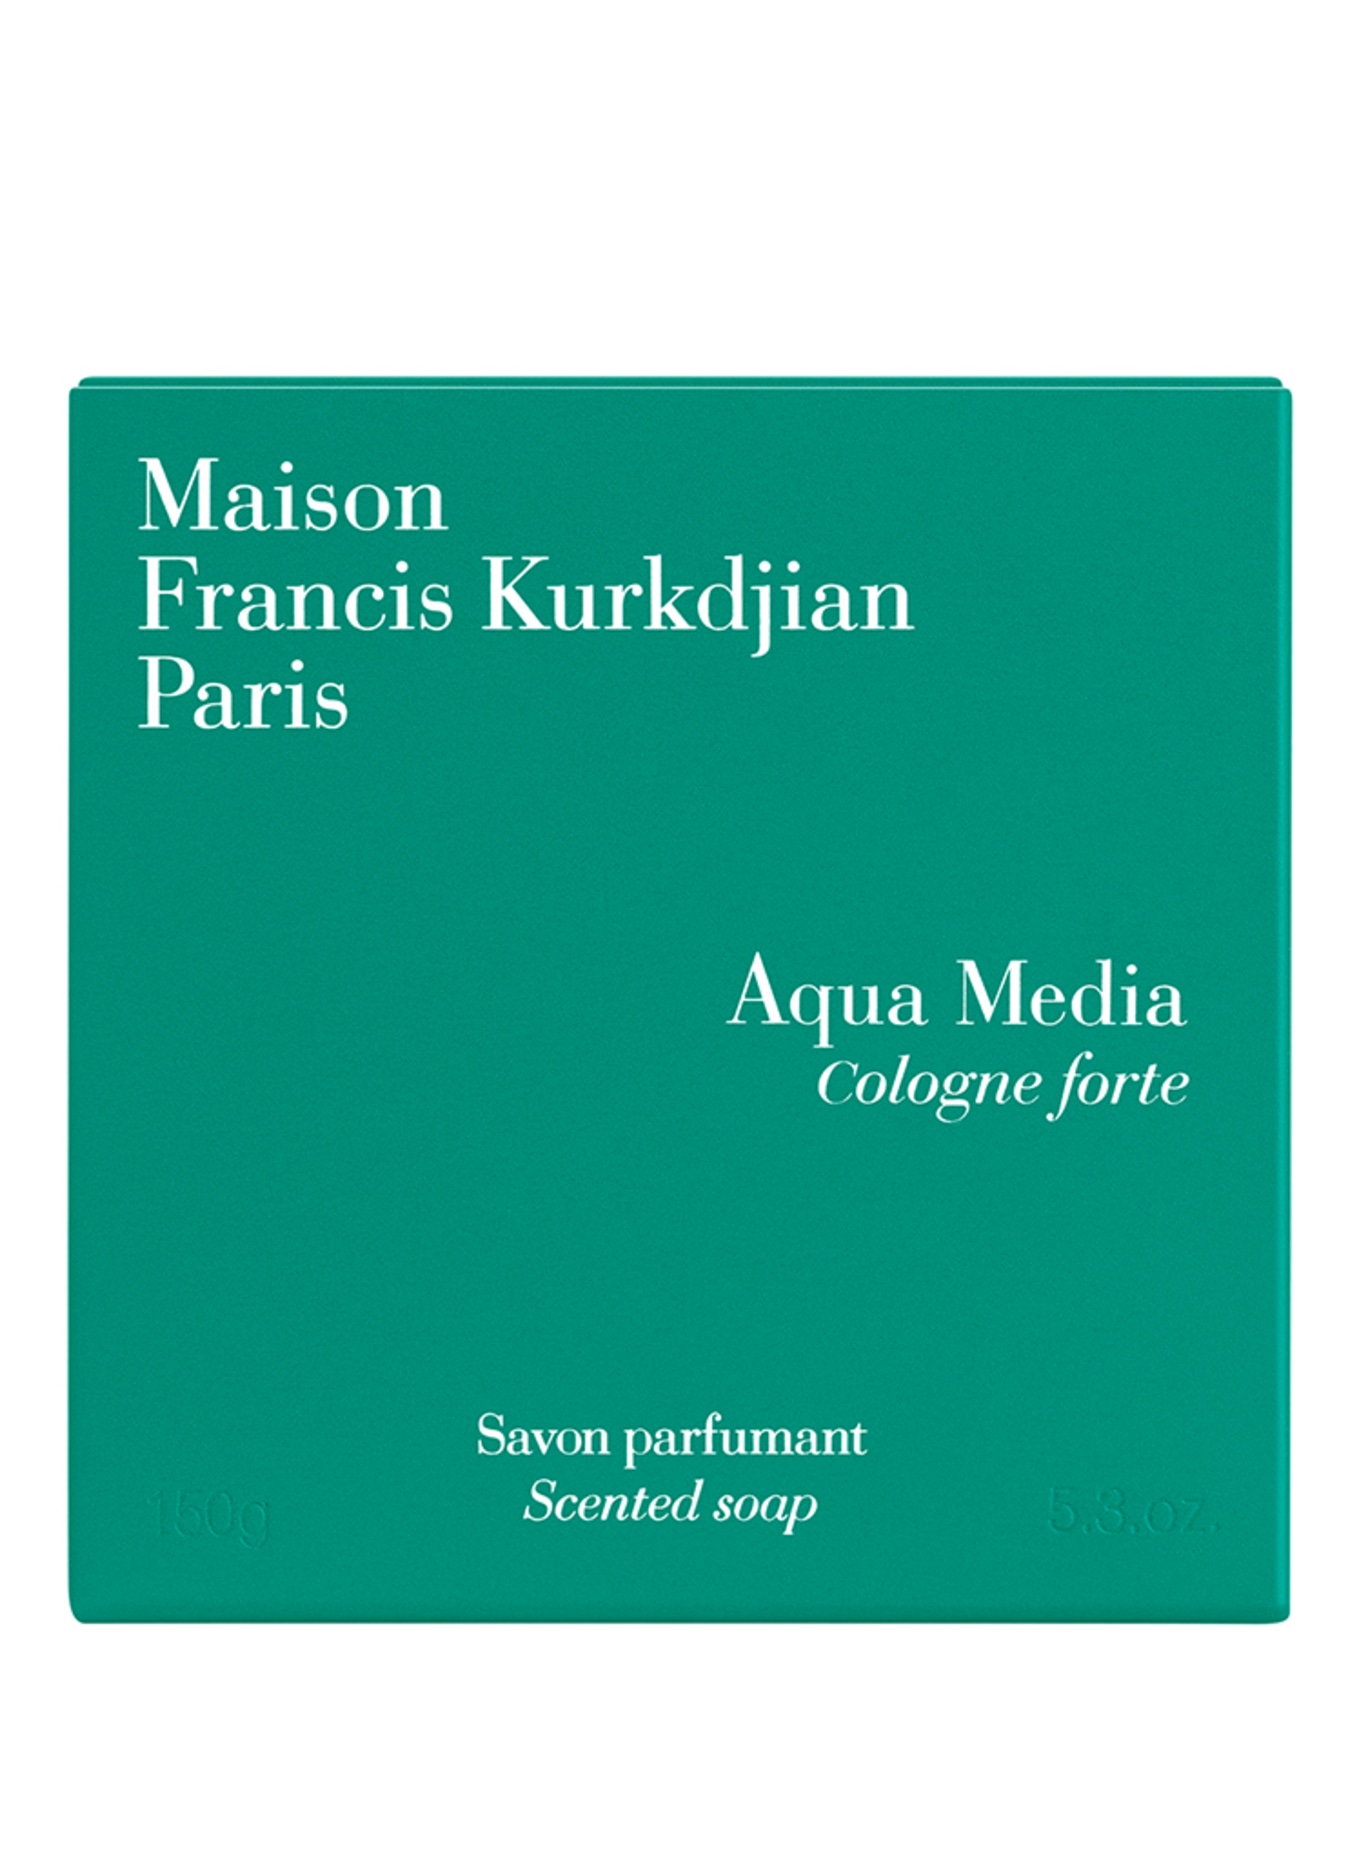 Maison Francis Kurkdjian Paris AQUA MEDIA COLOGNE FORTE (Bild 2)